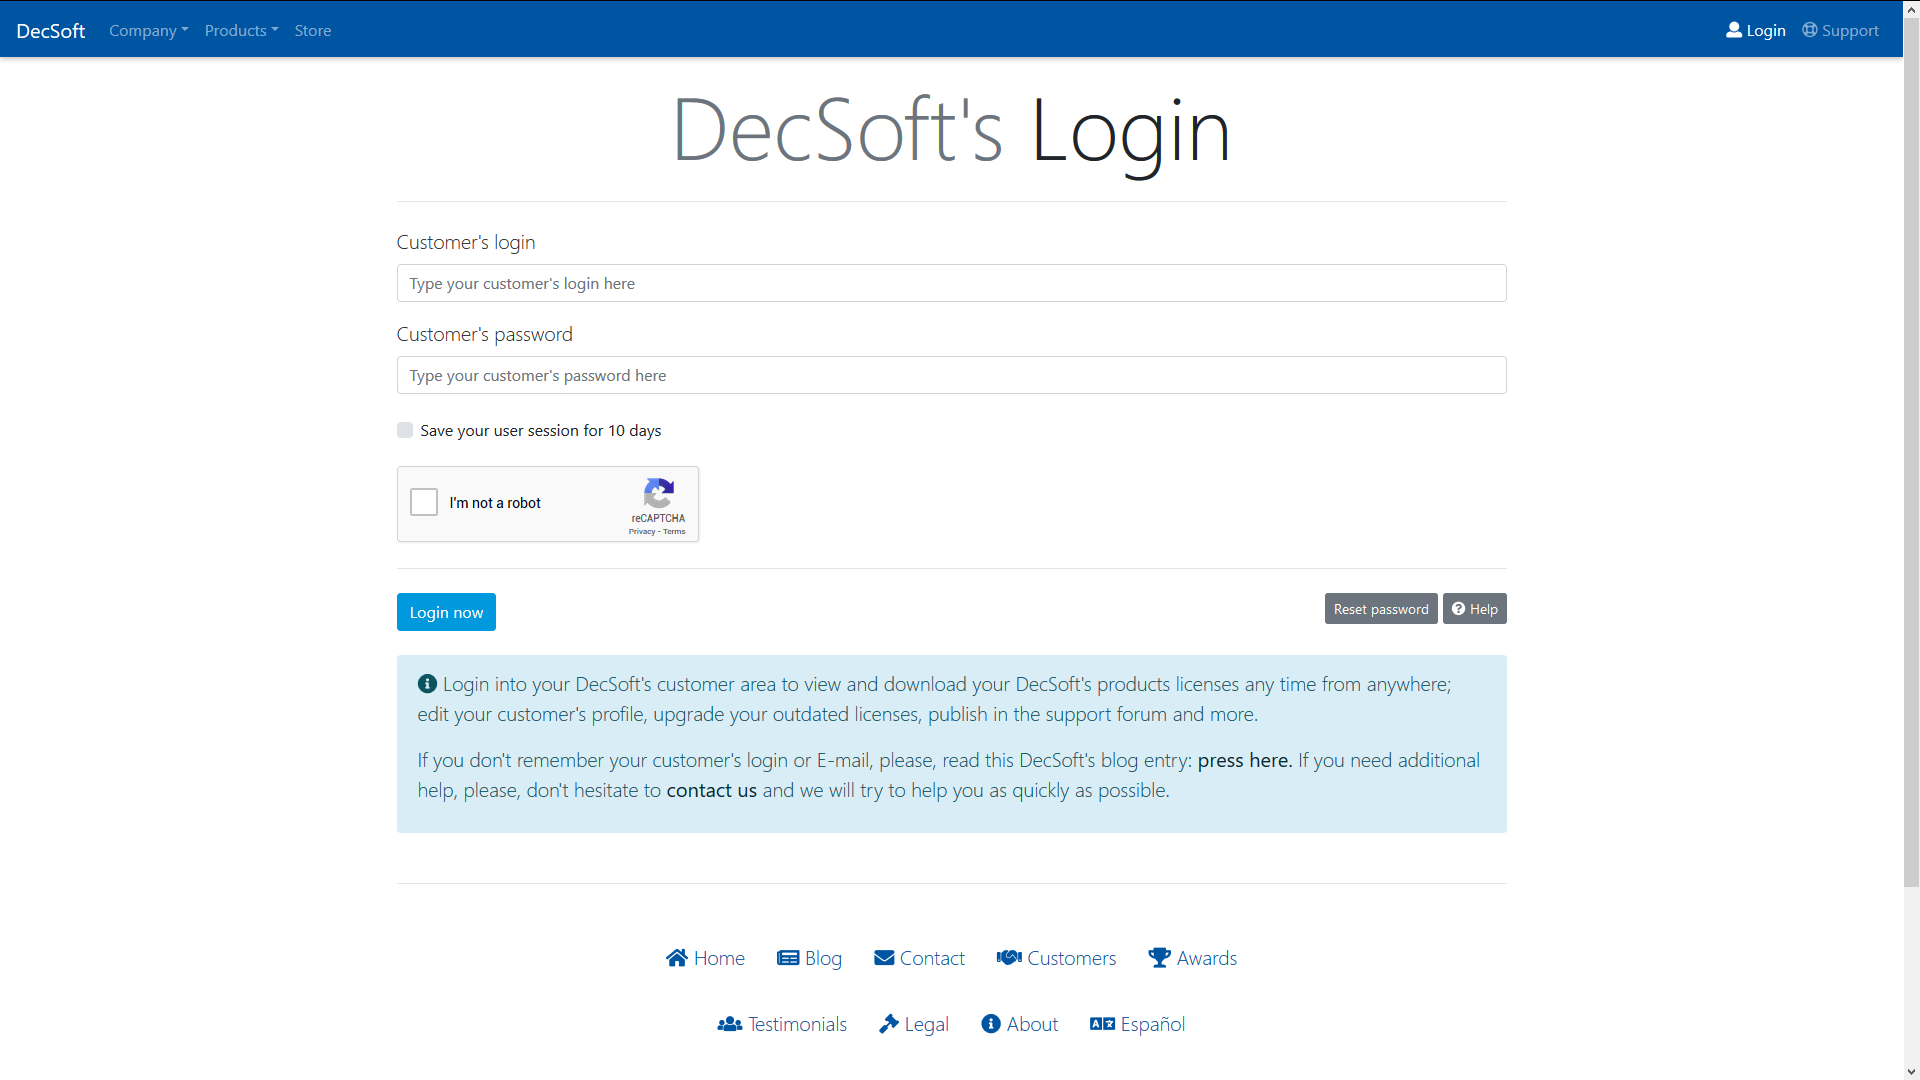 The DecSoft reset customer password form